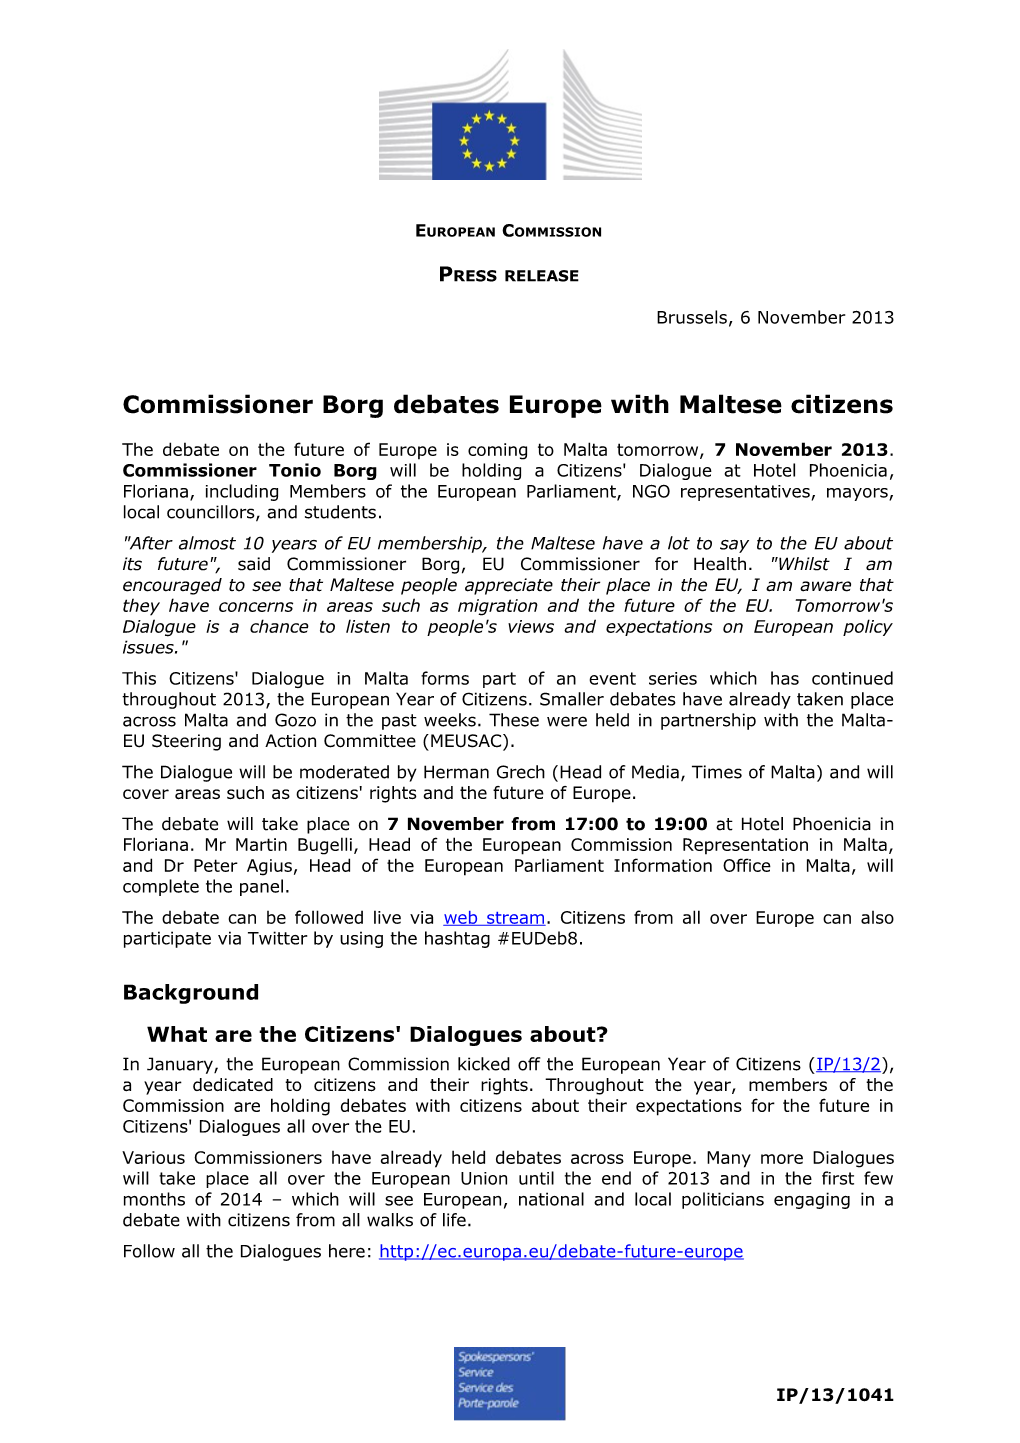 Commissioner Borg Debates Europe with Maltese Citizens